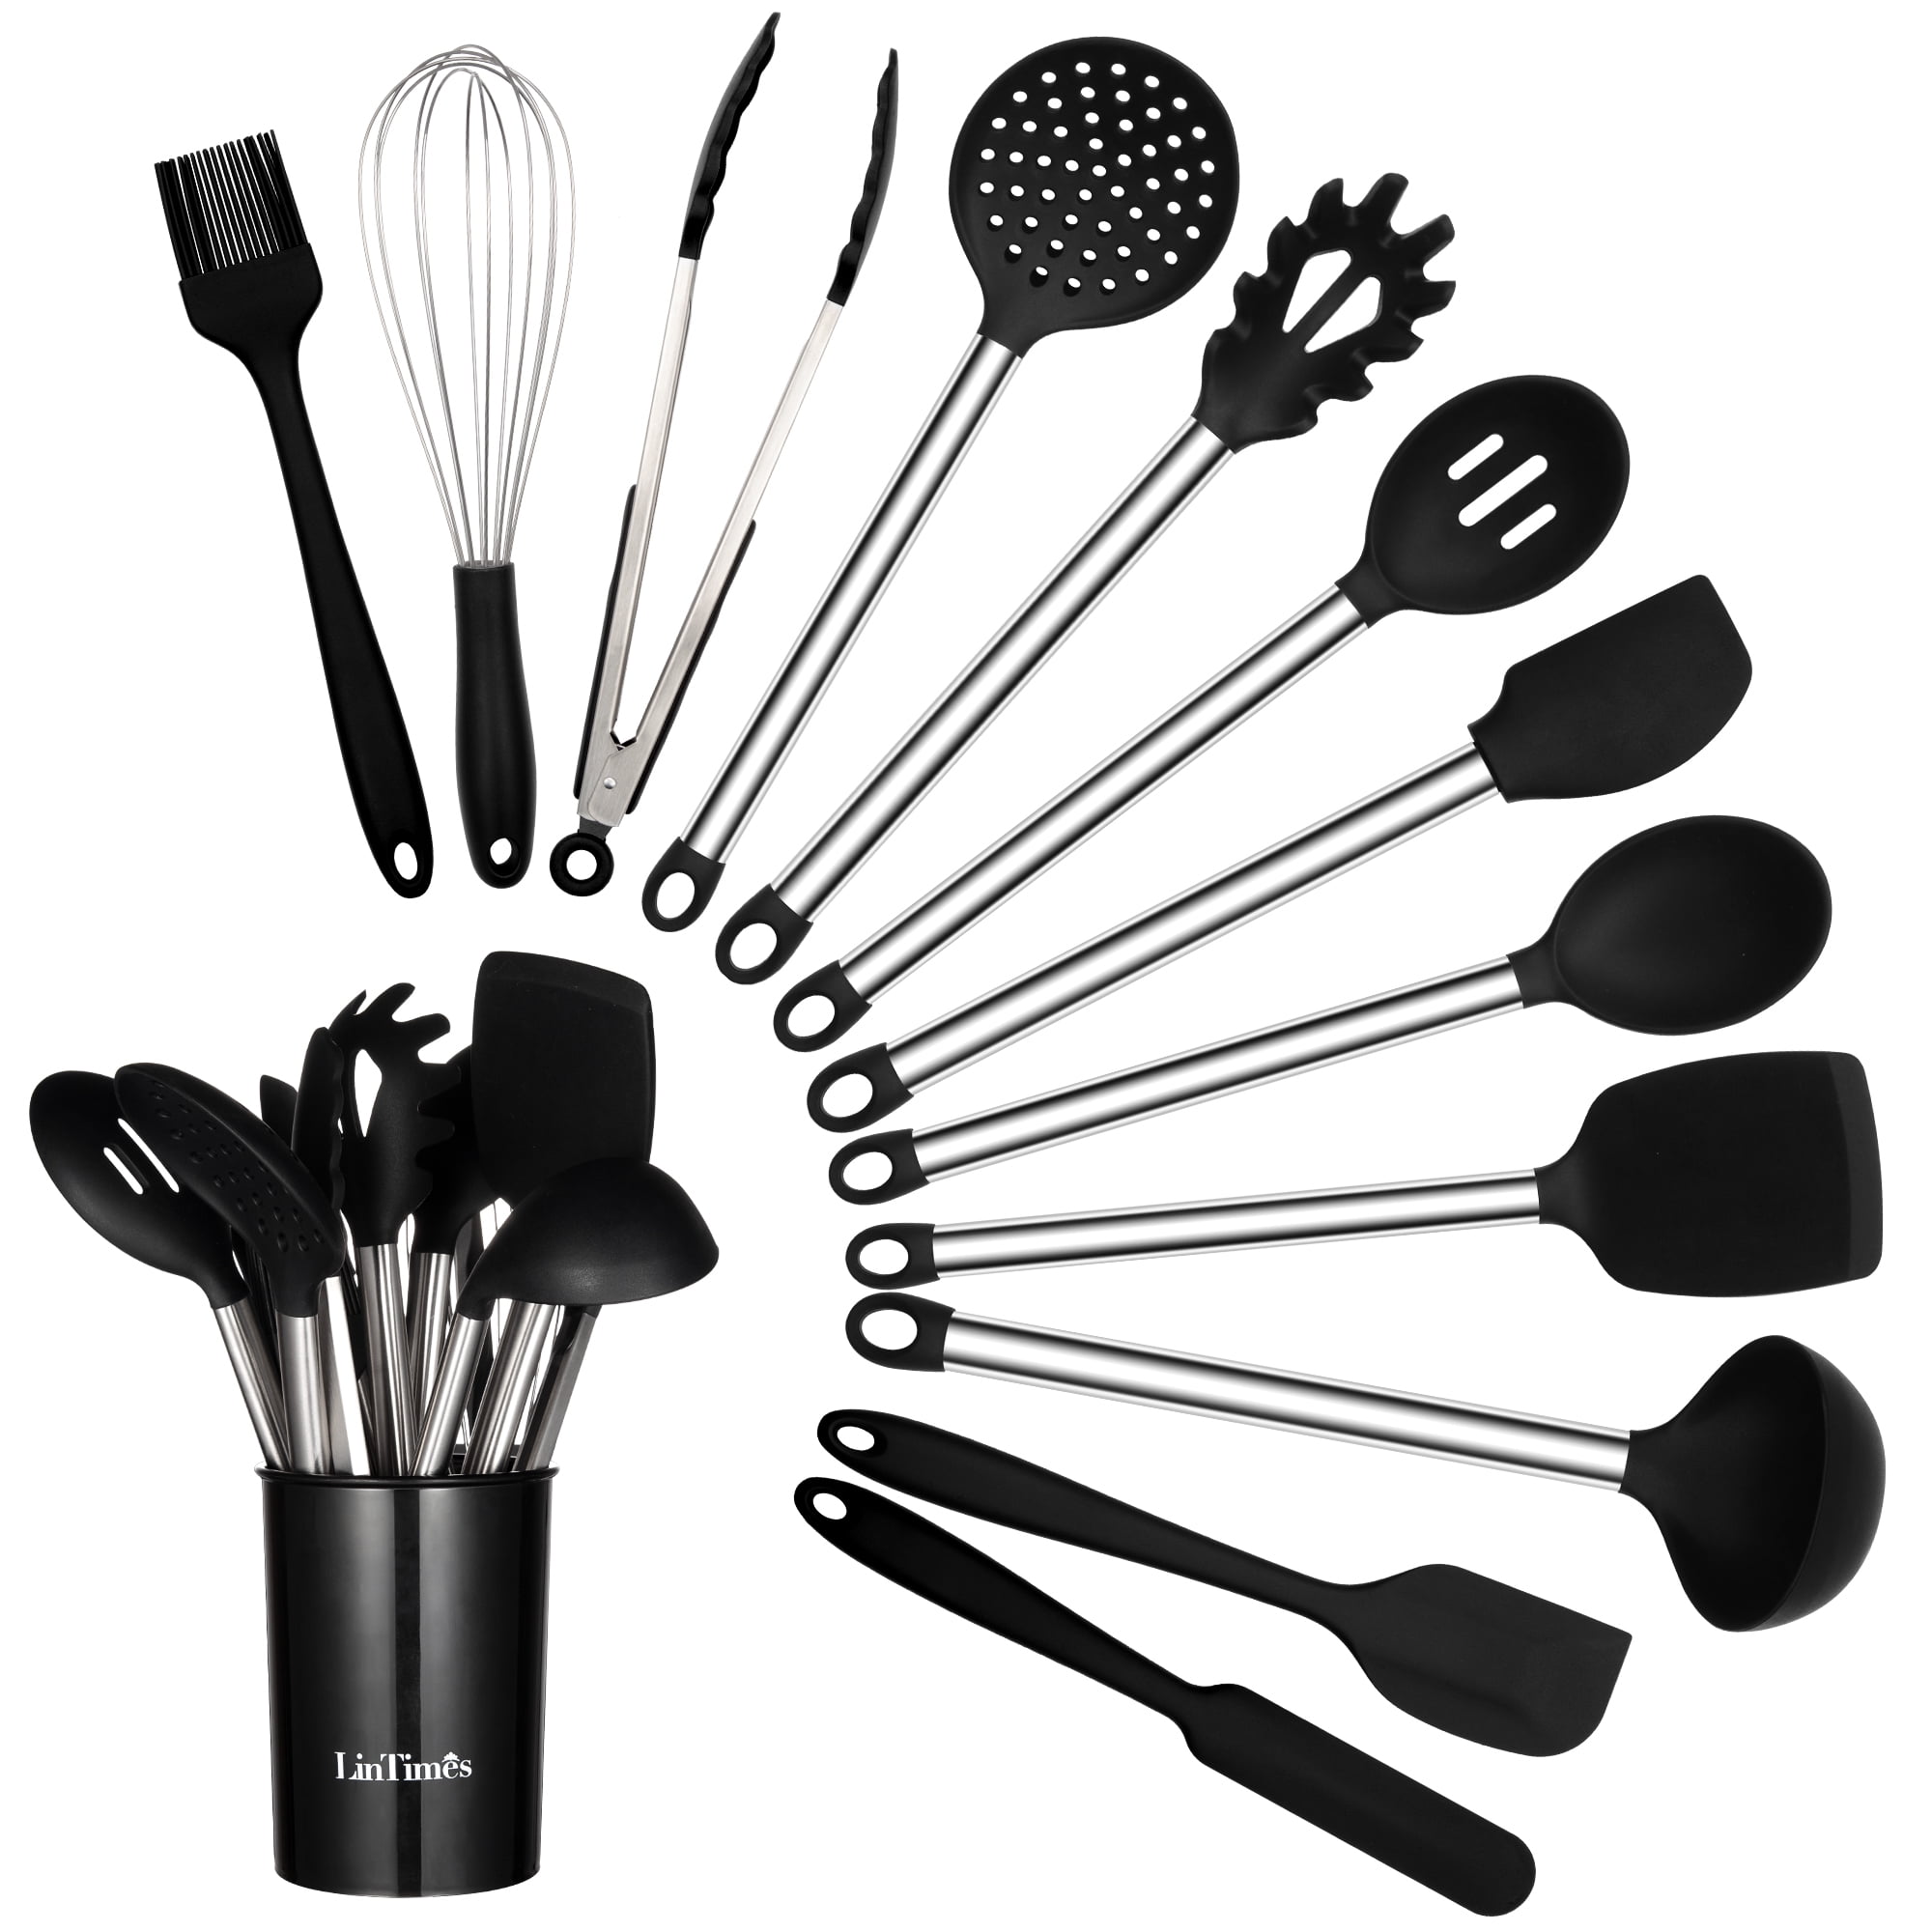 Silicone Cooking Utensils Set, 11 Pcs black silicone cooking utensils set,  Non-Stick & 230°C Heat Re…See more Silicone Cooking Utensils Set, 11 Pcs